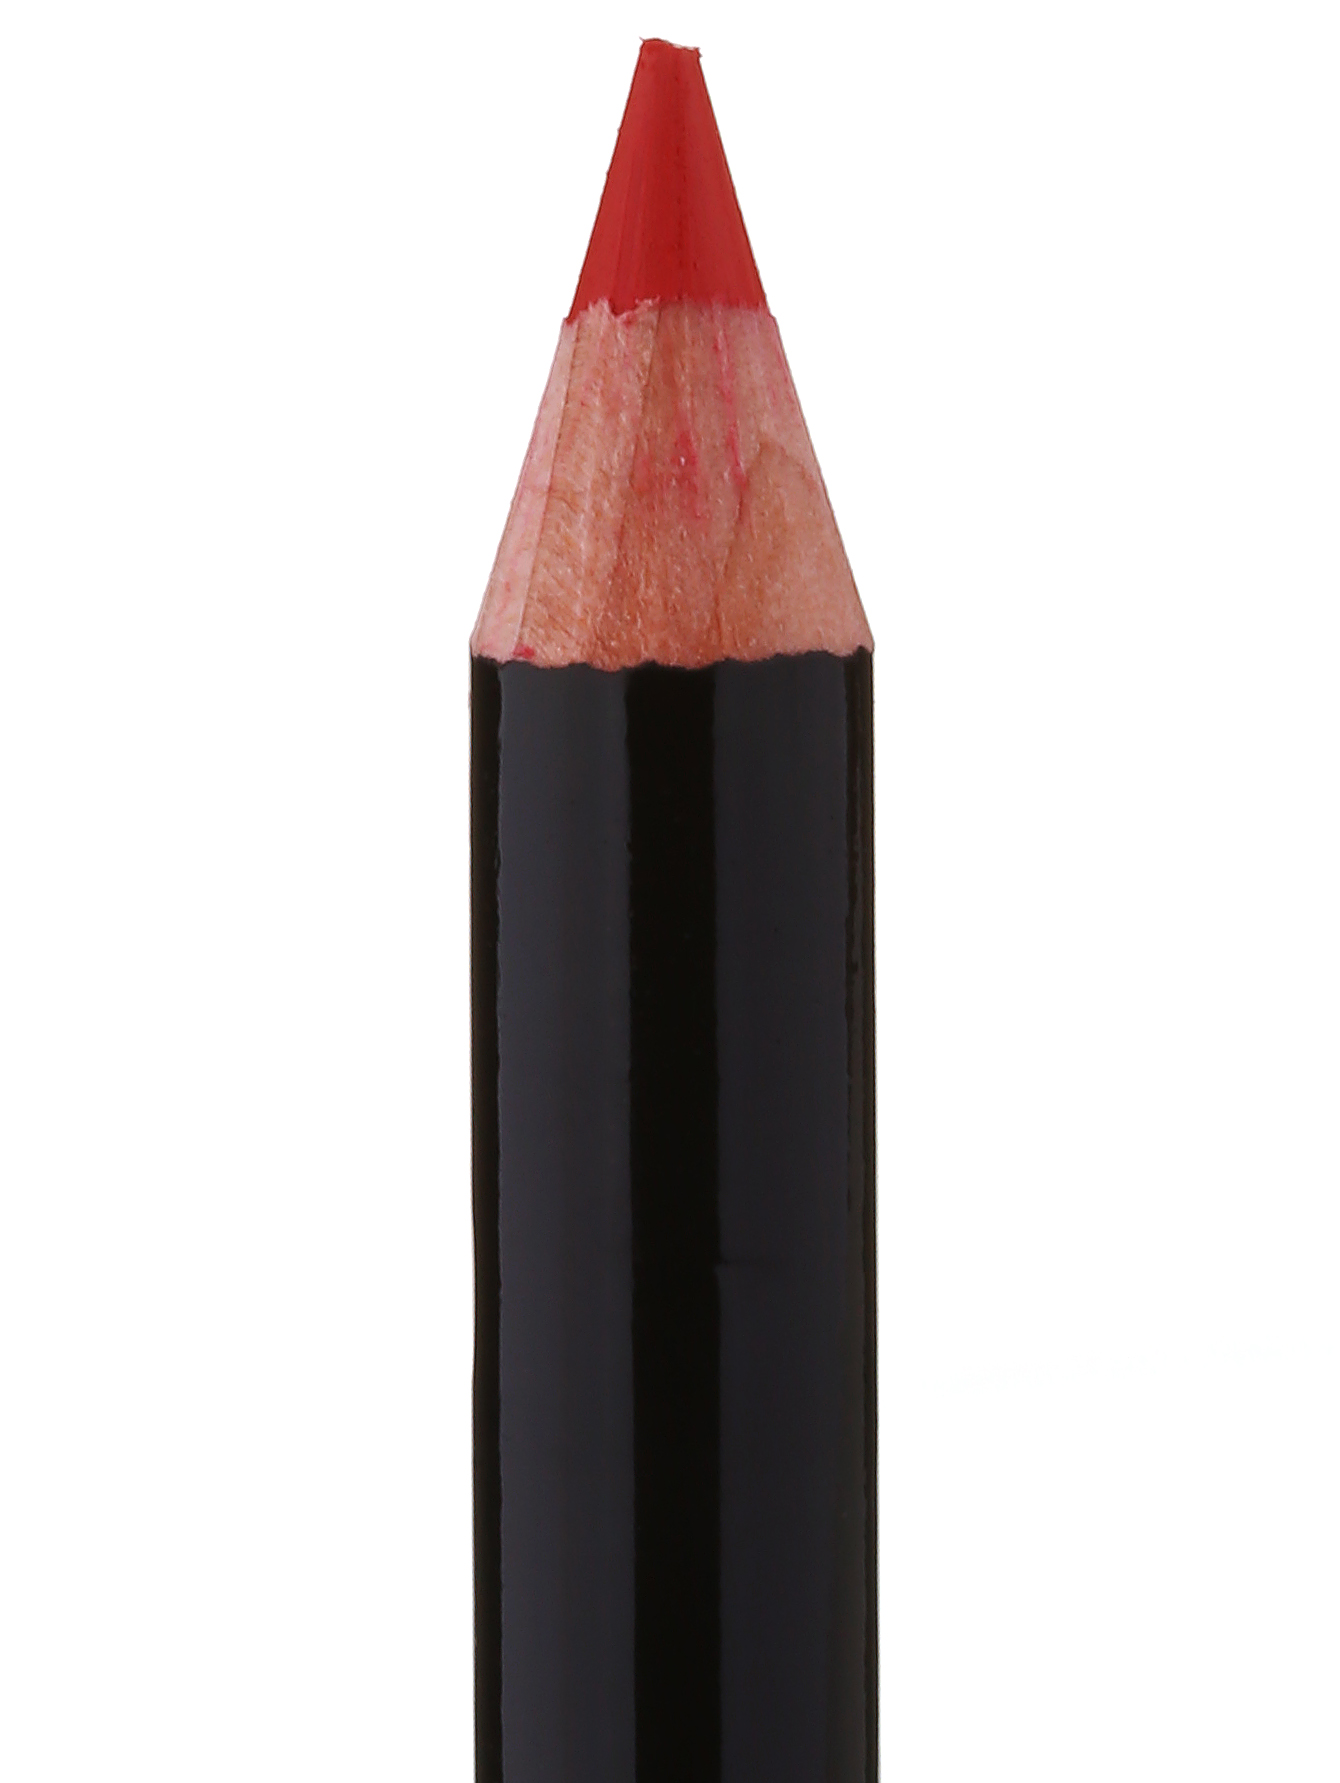  Карандаш для контура губ - Red, Lip Liner - Общий вид